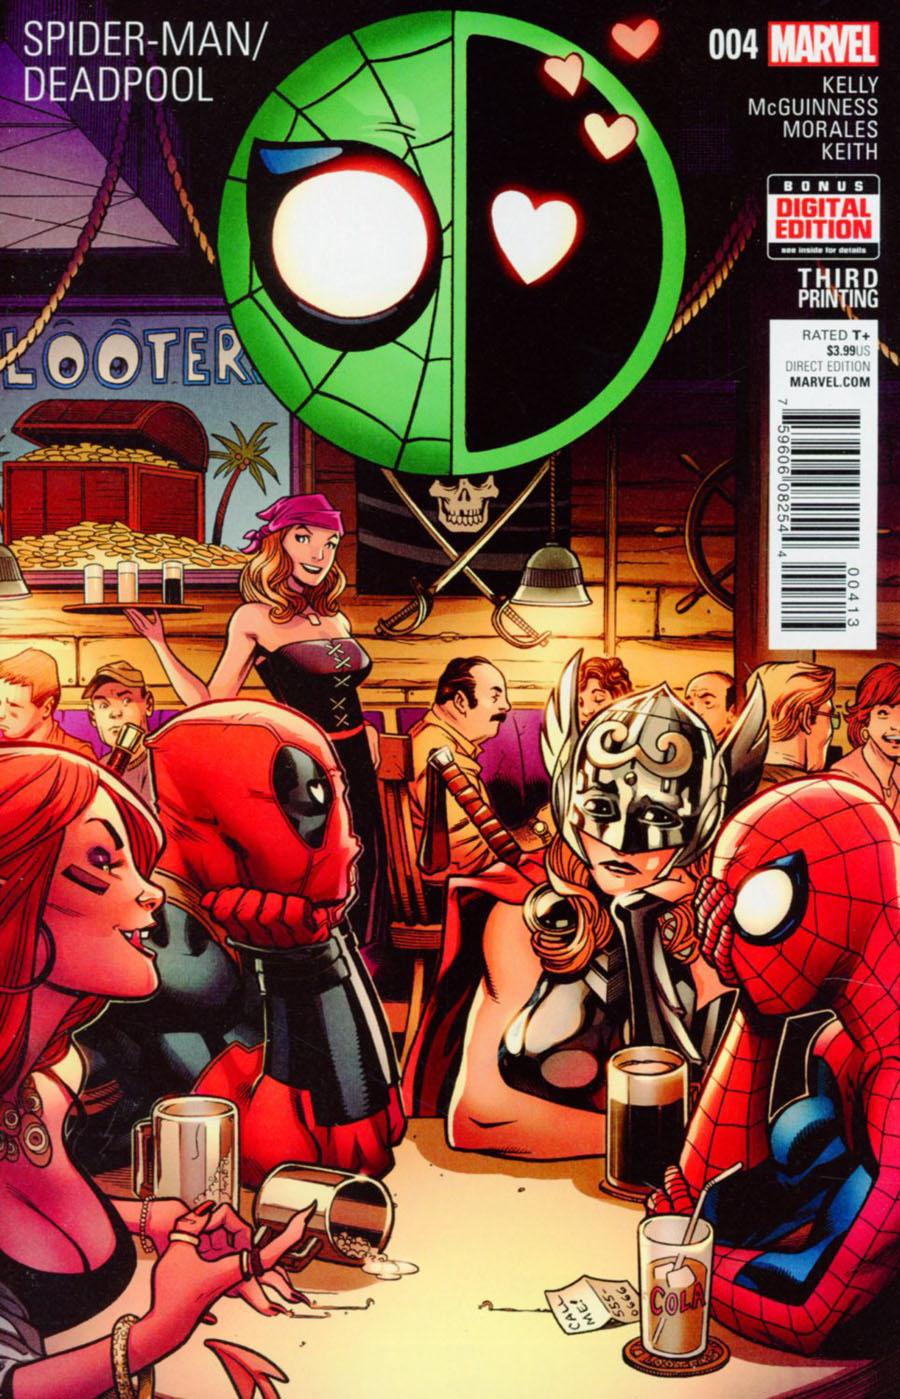 Spider-Man Deadpool Vol. 1 #4